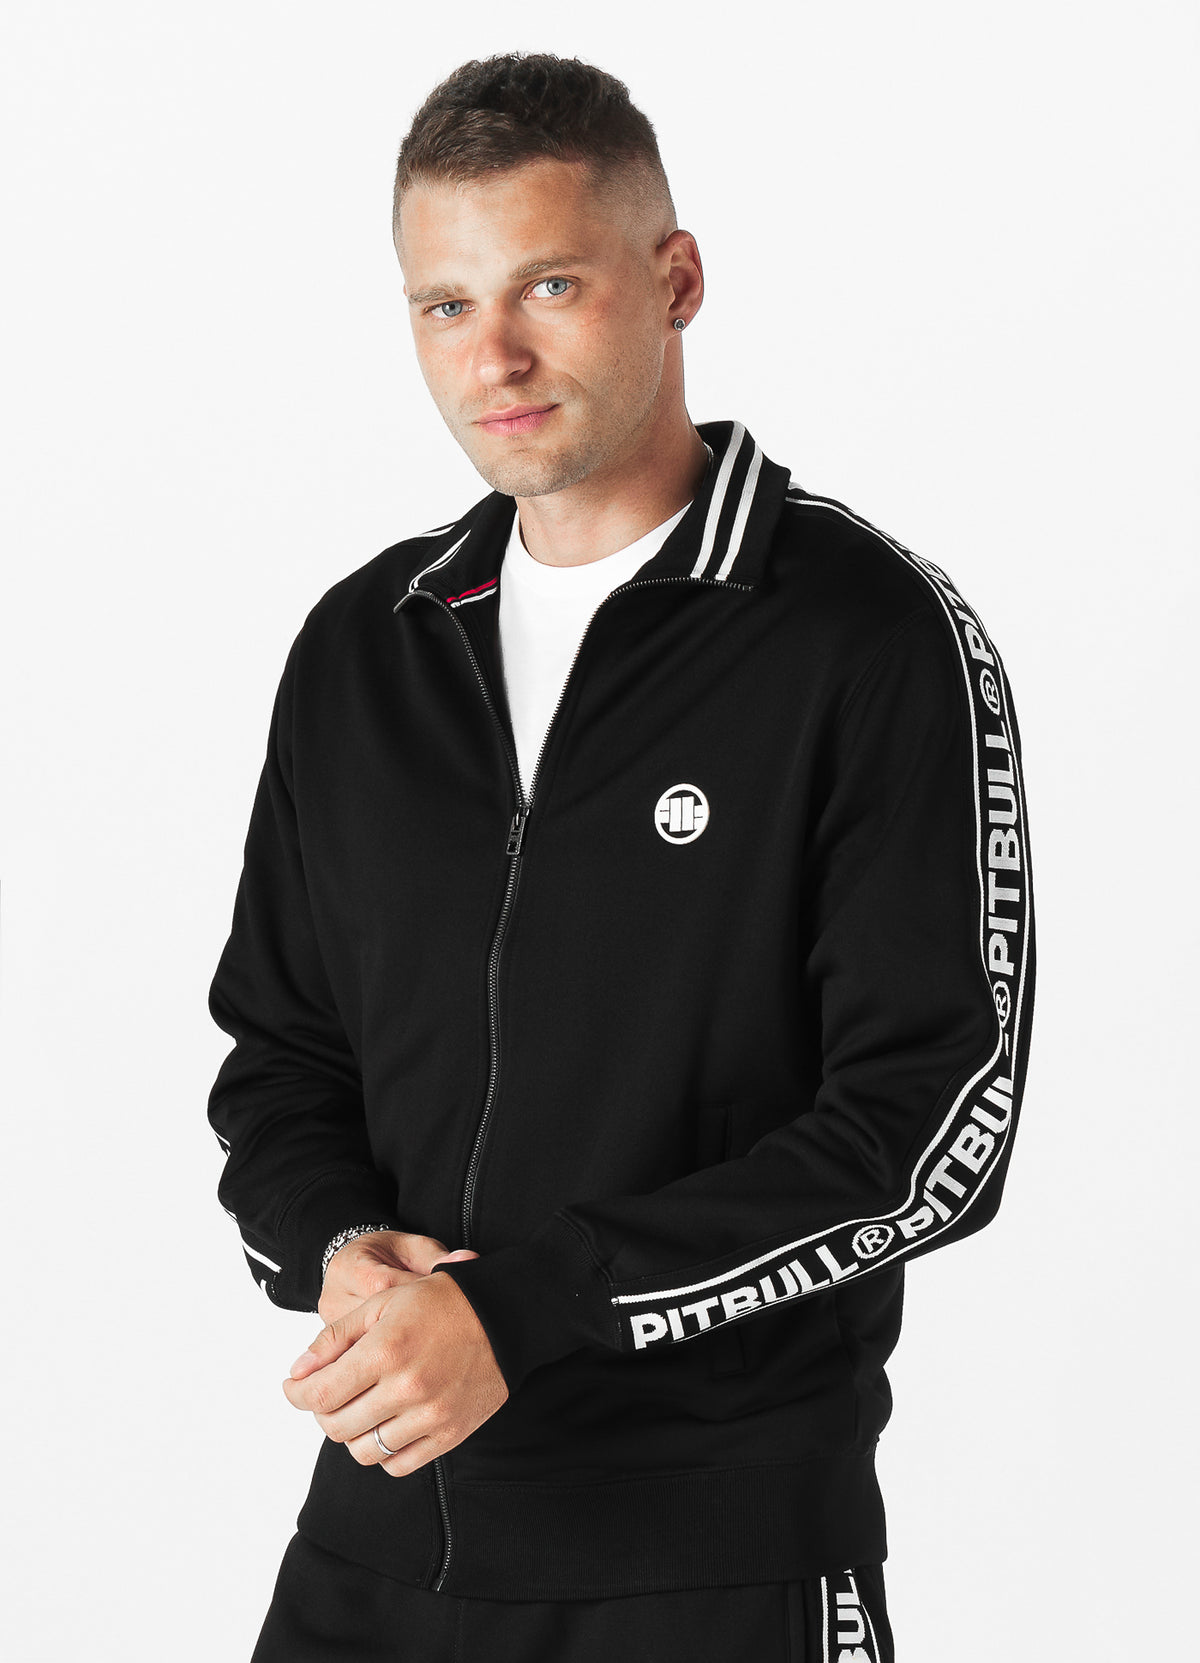 TAPE LOGO Black Zip Sweatshirt - Pitbull West Coast International Store 